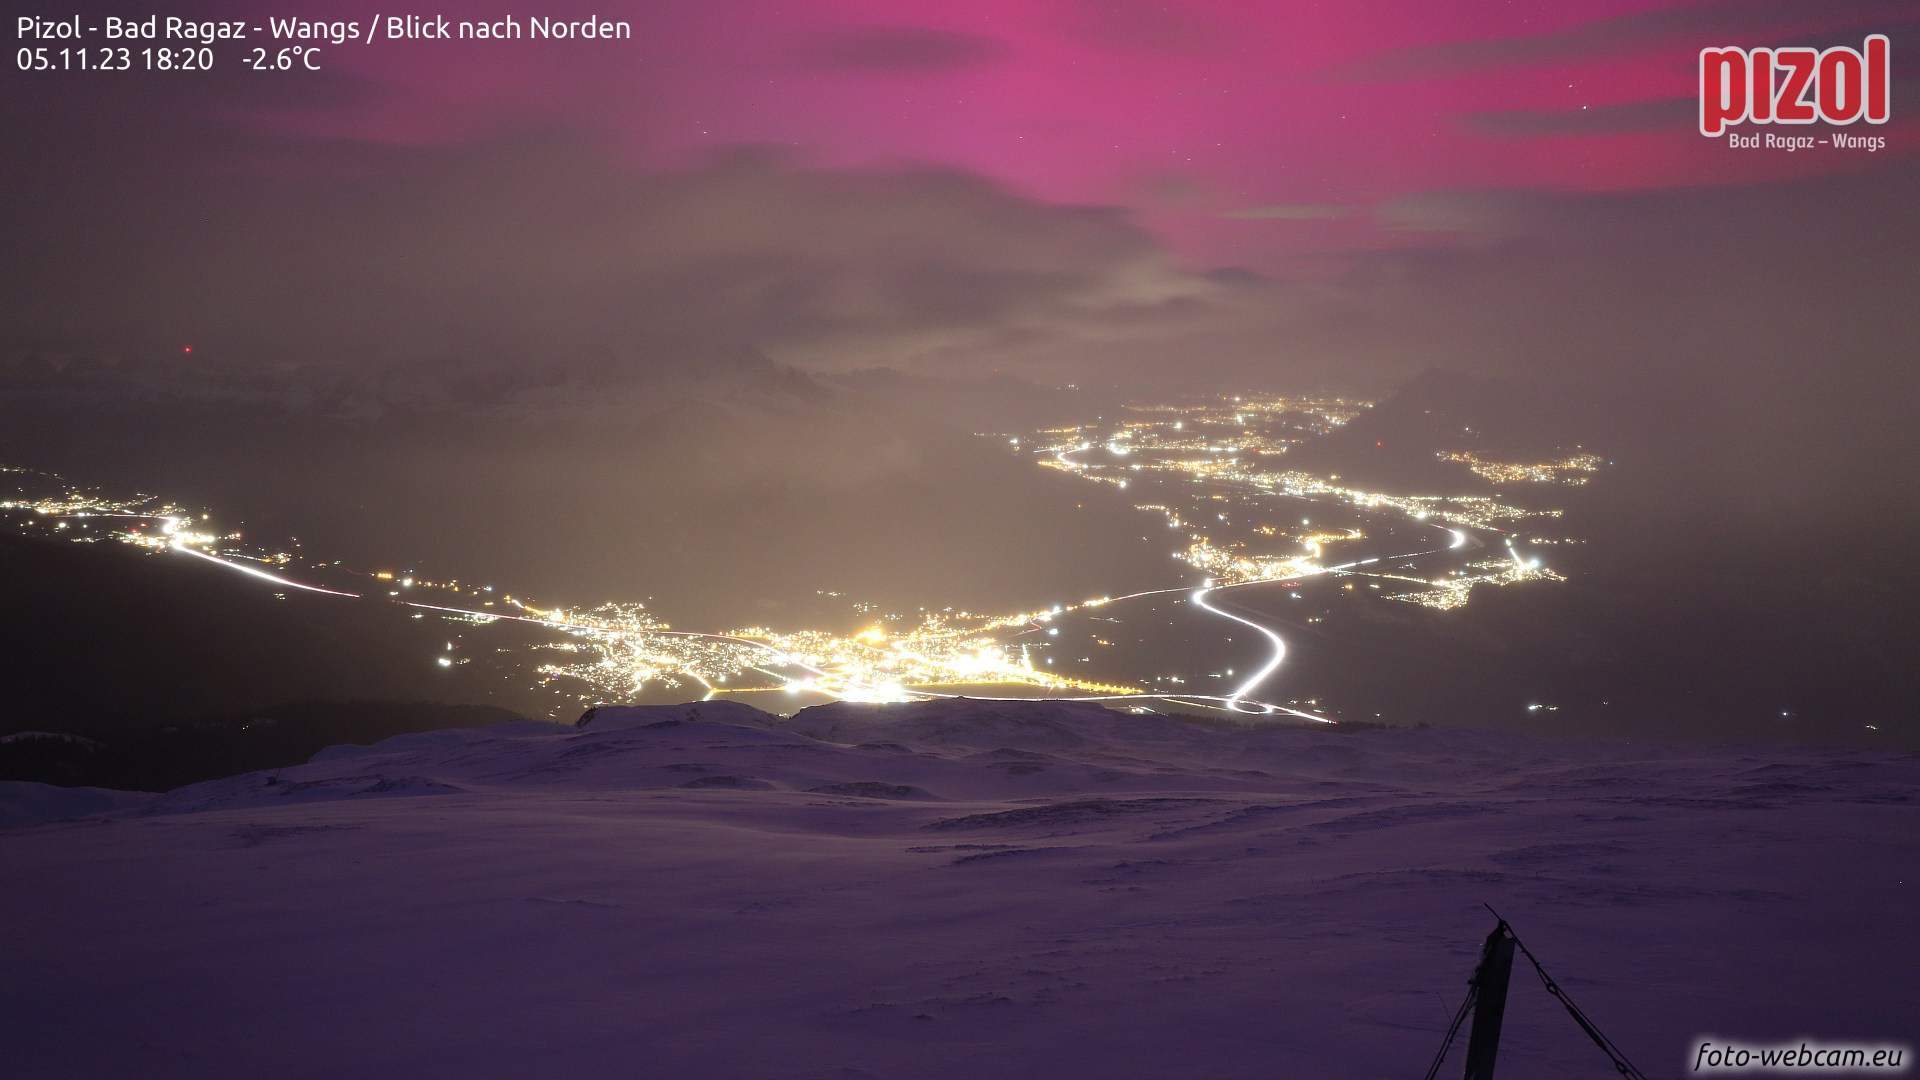 Fig. 11: Northern Lights seen from Pizol on November 5; Source: www.foto-webcam.eu